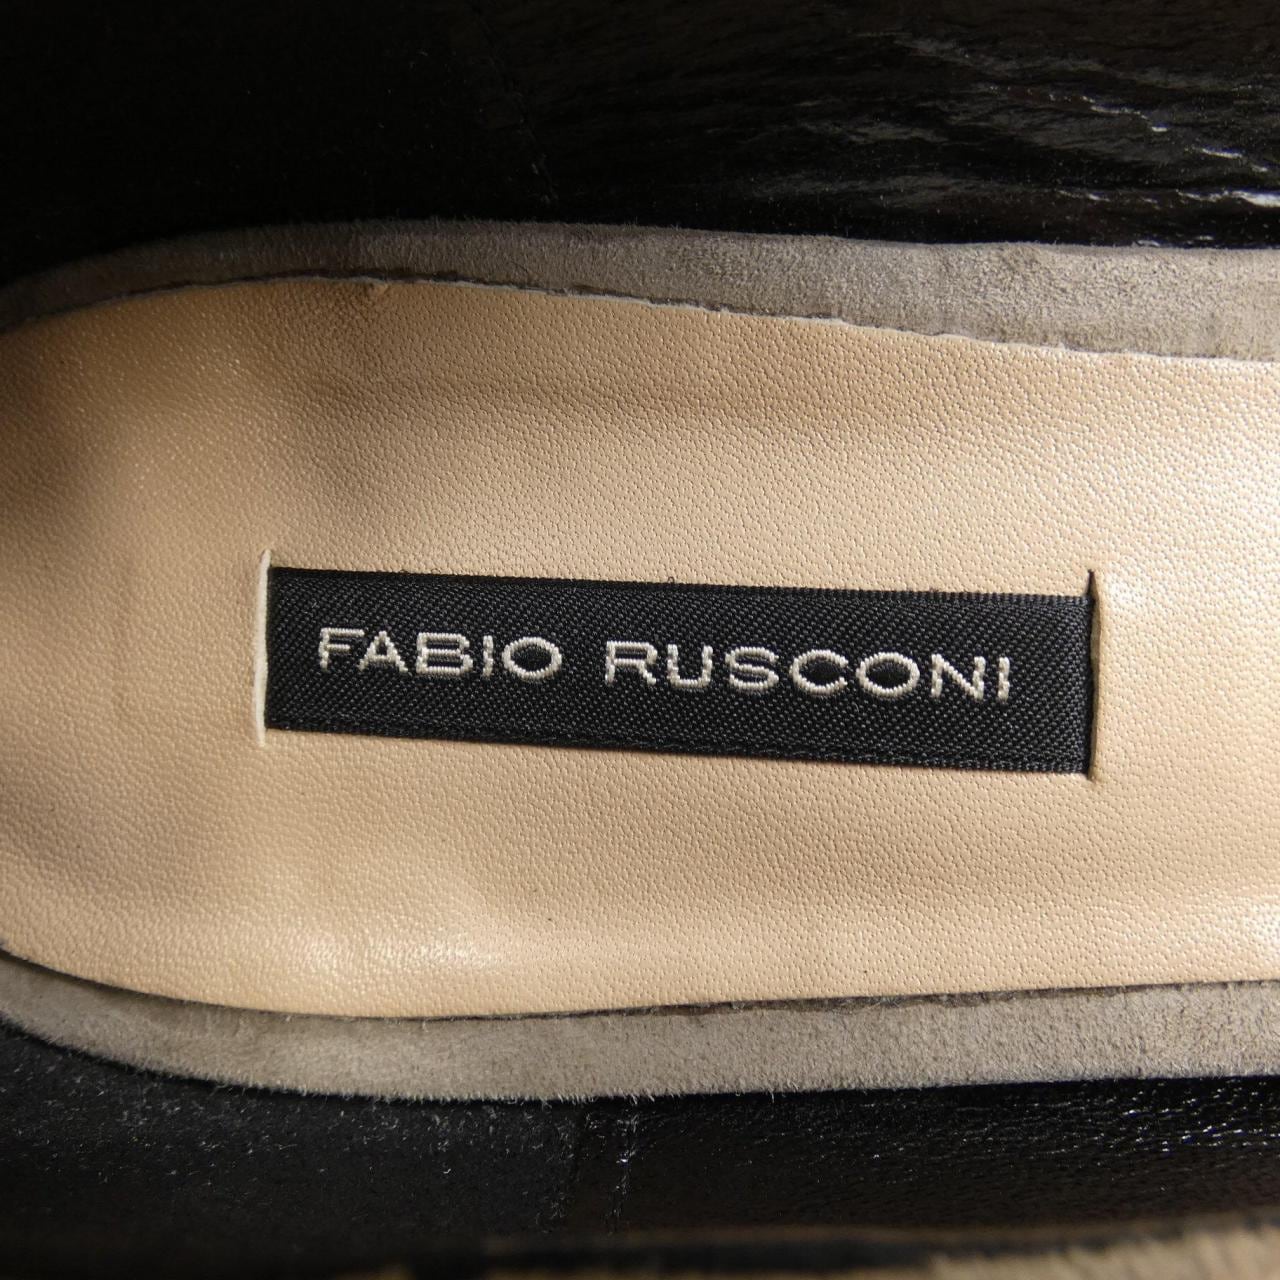 Fabio Rusconi Shoes